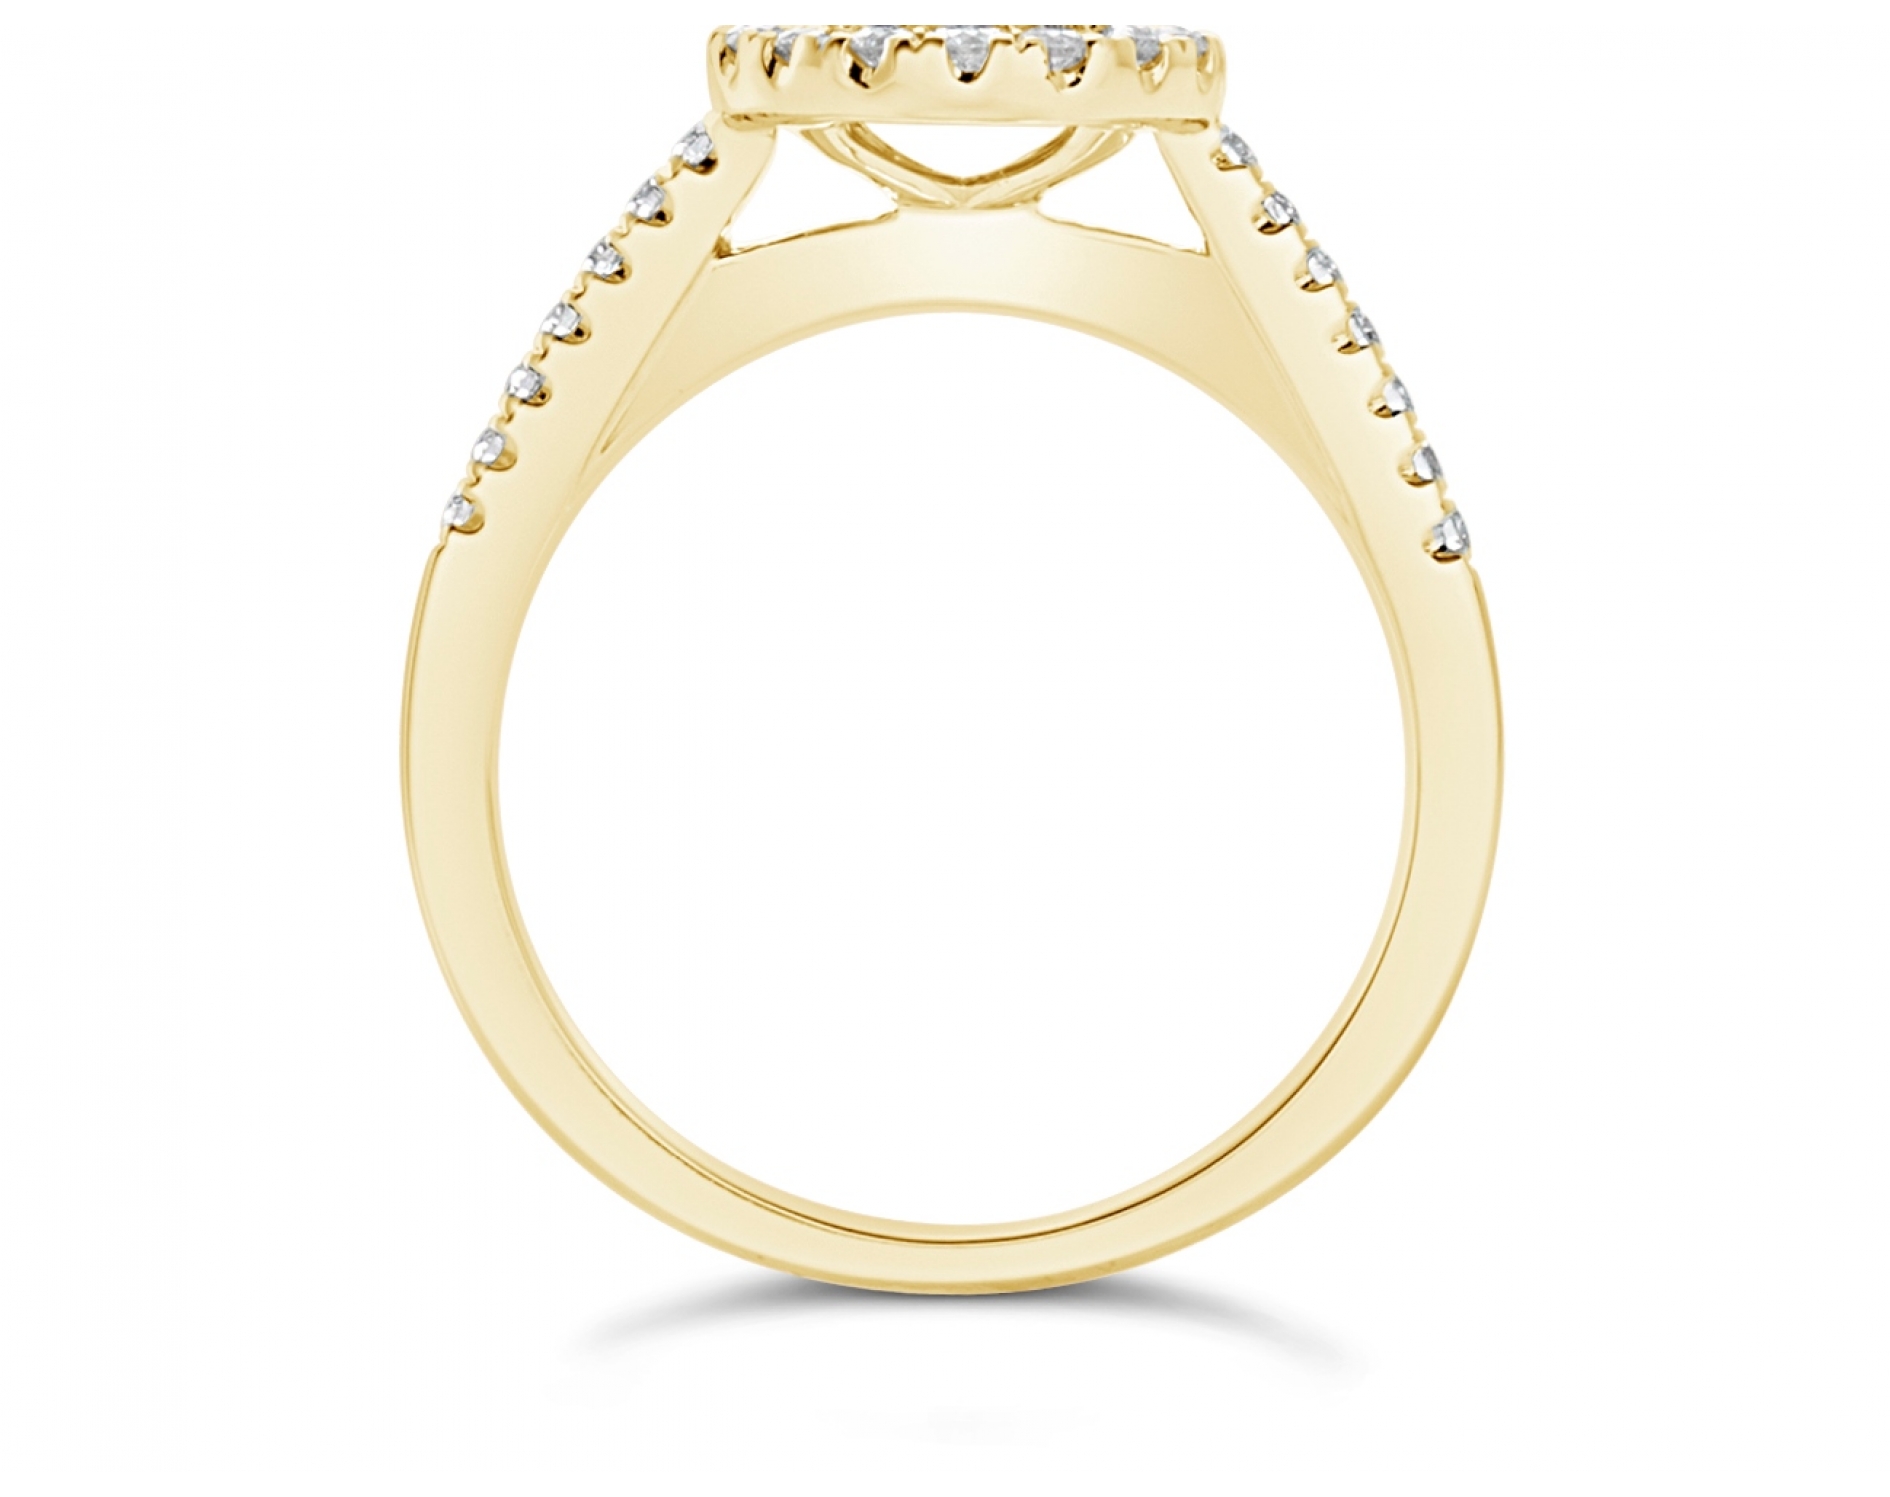 18k yellow gold halo illusion set engagement ring with pave set sidestones